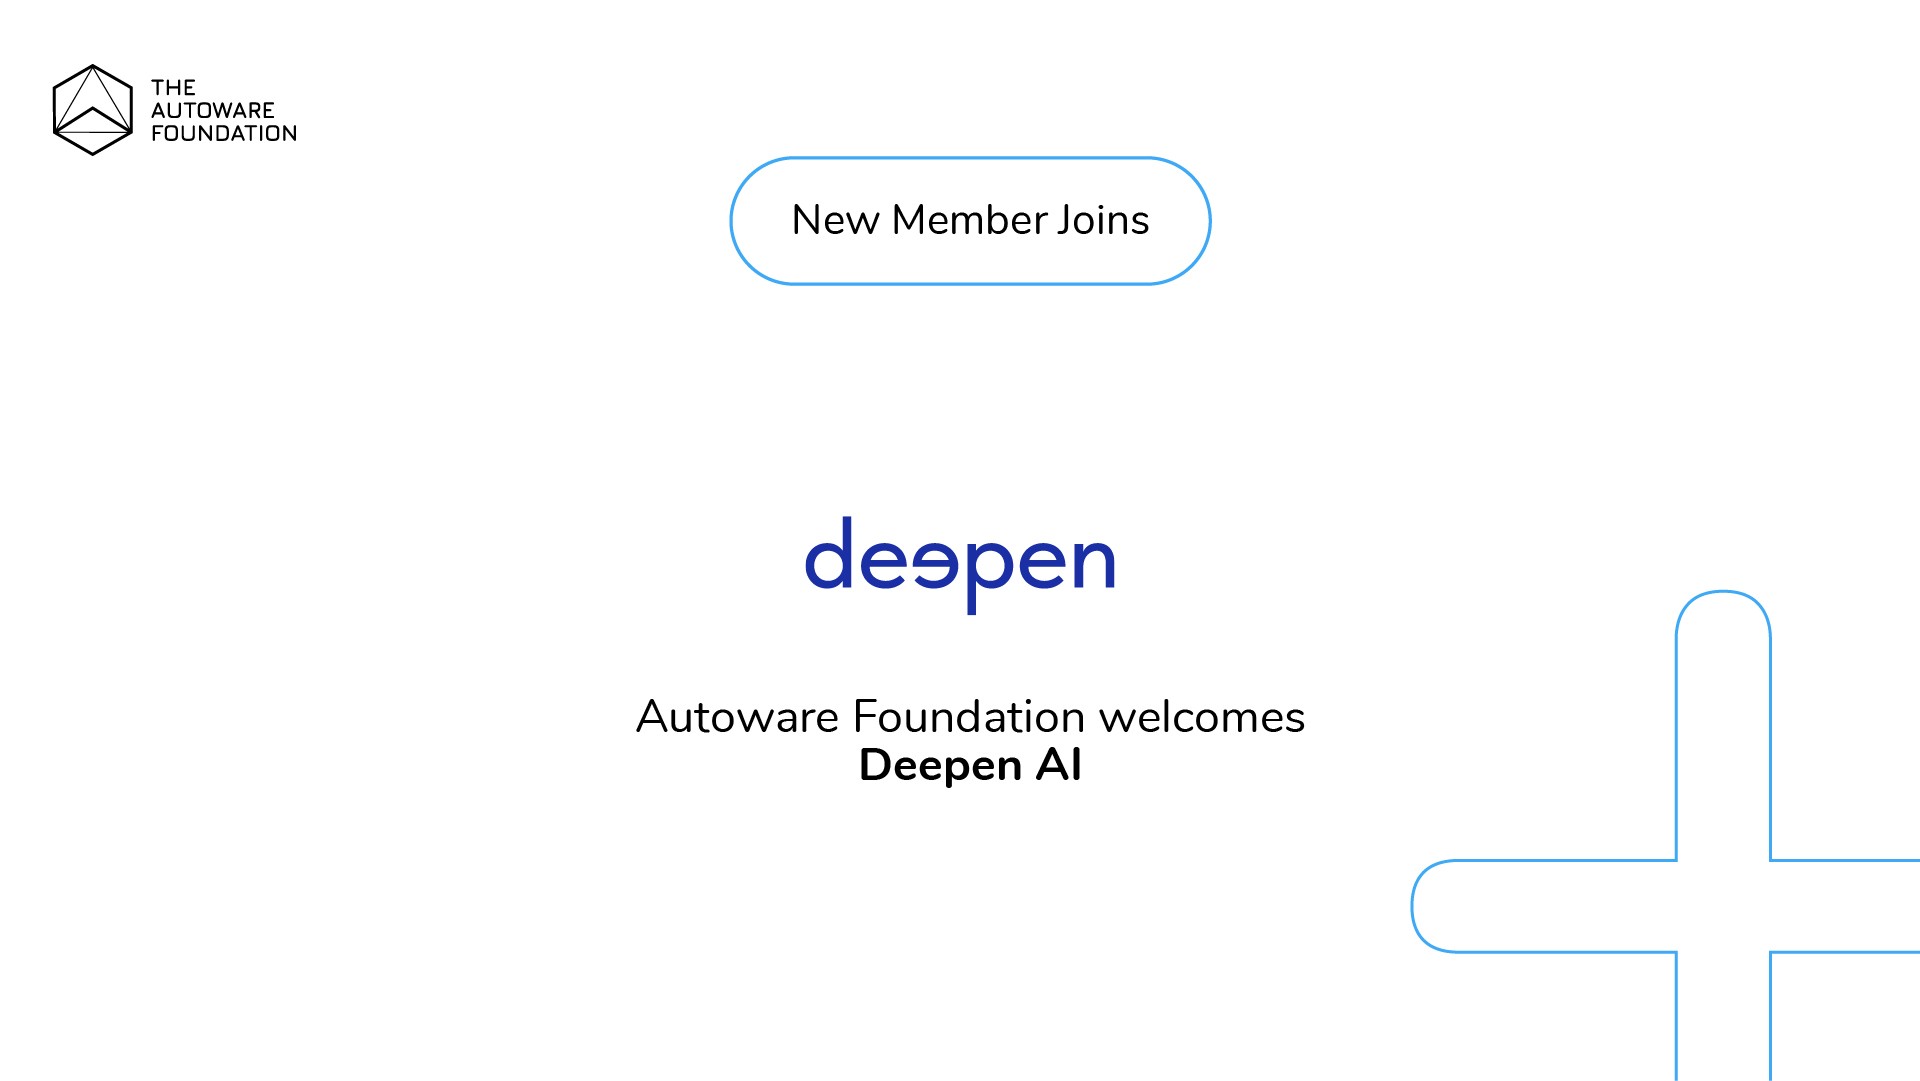 Deepen AI joins the Autoware Foundation